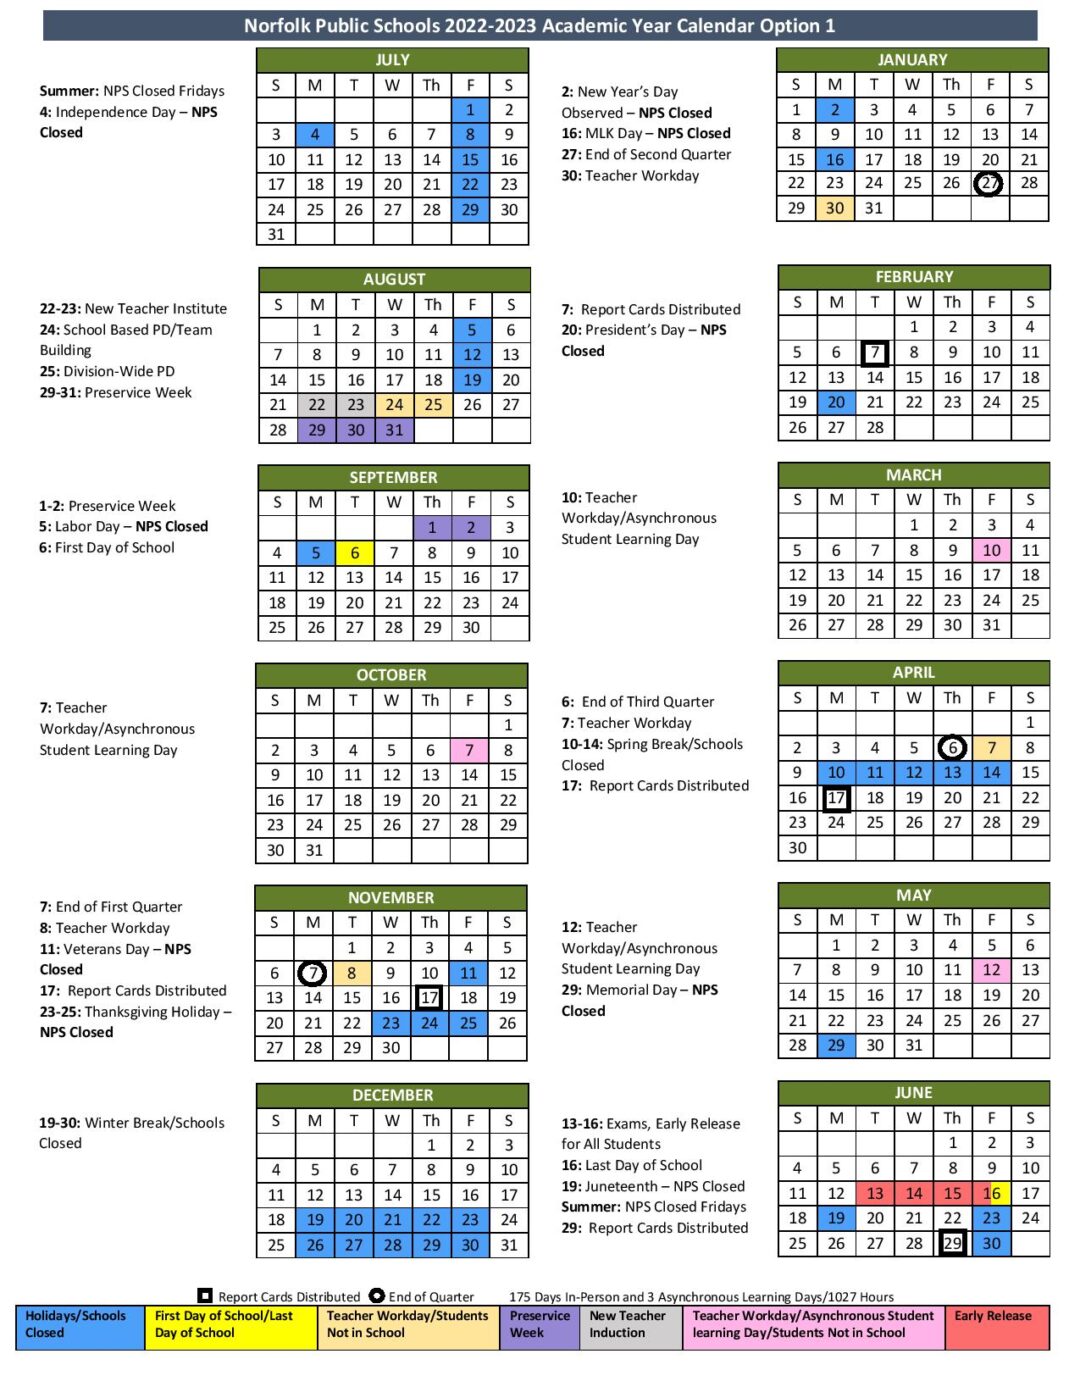 Norfolk Public Schools Calendar 2022-2023 in PDF